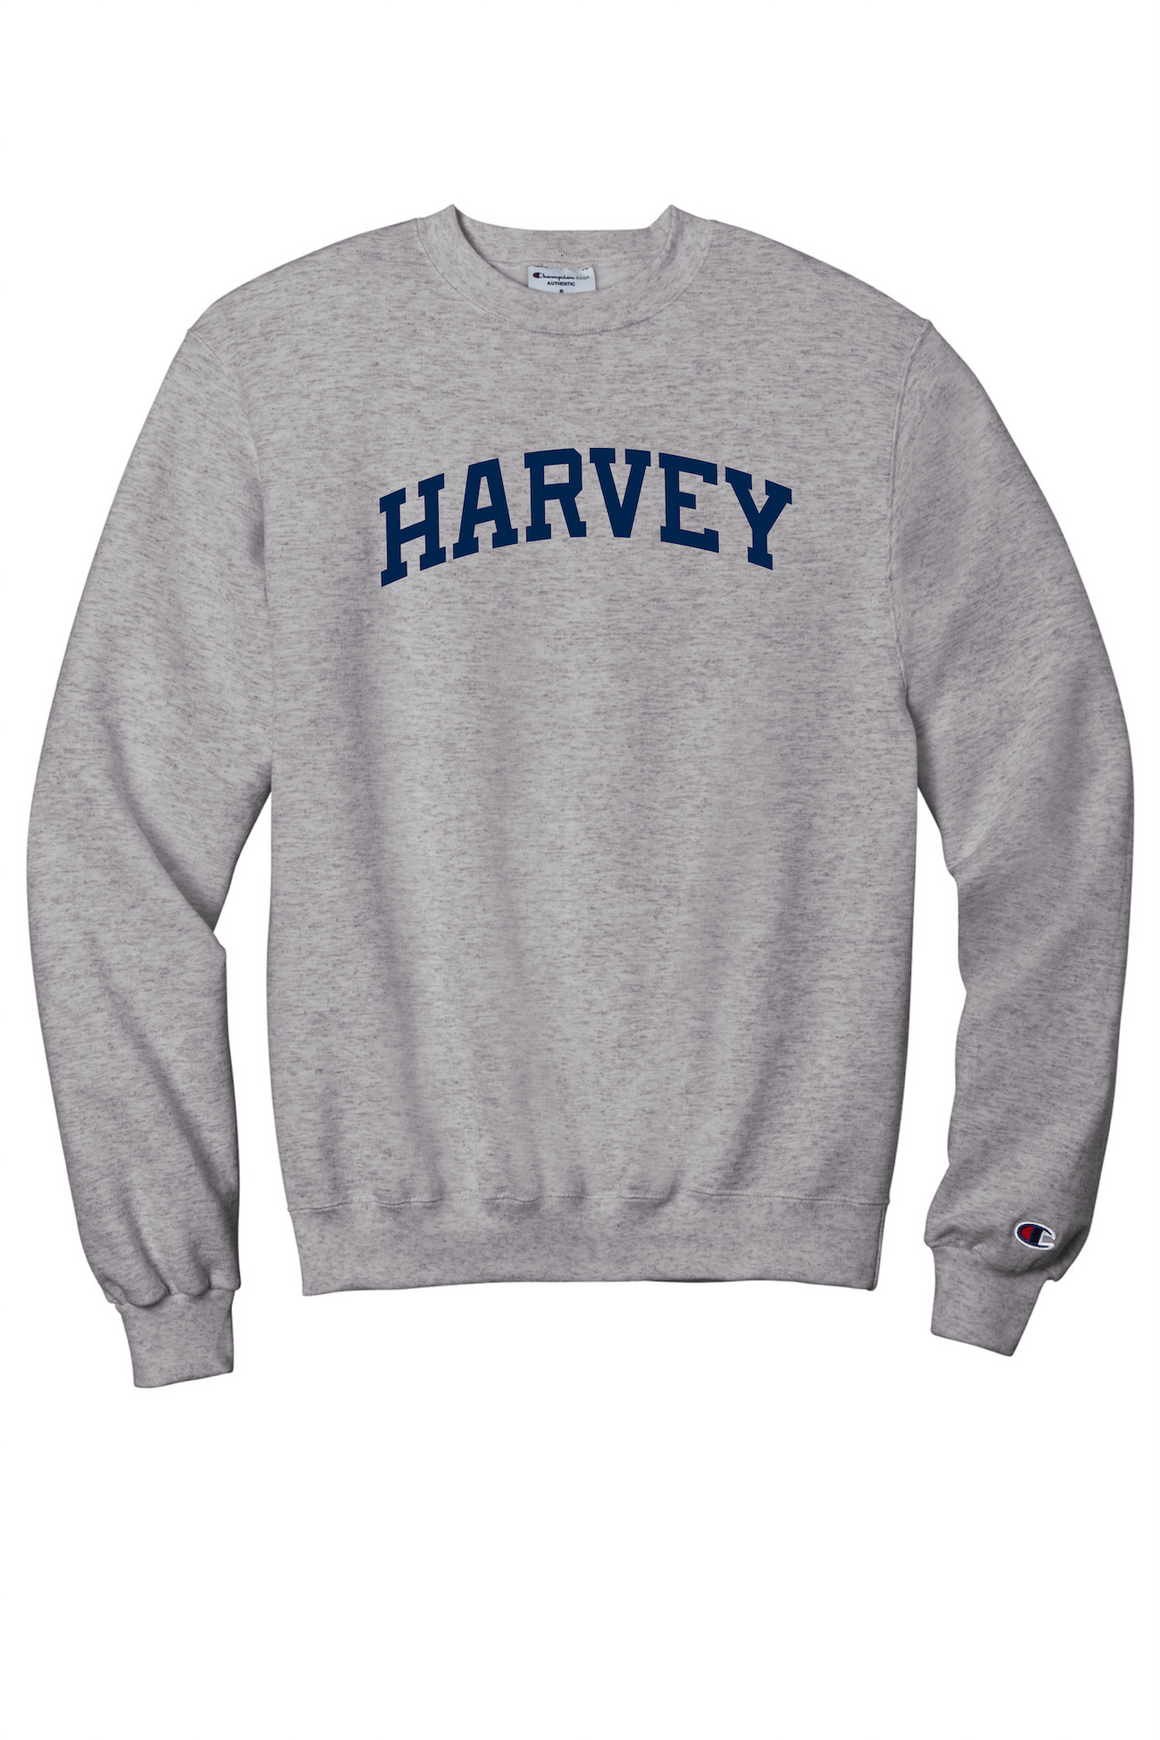 Harvey School Champion Arc Logo Crewneck Sweatshirt